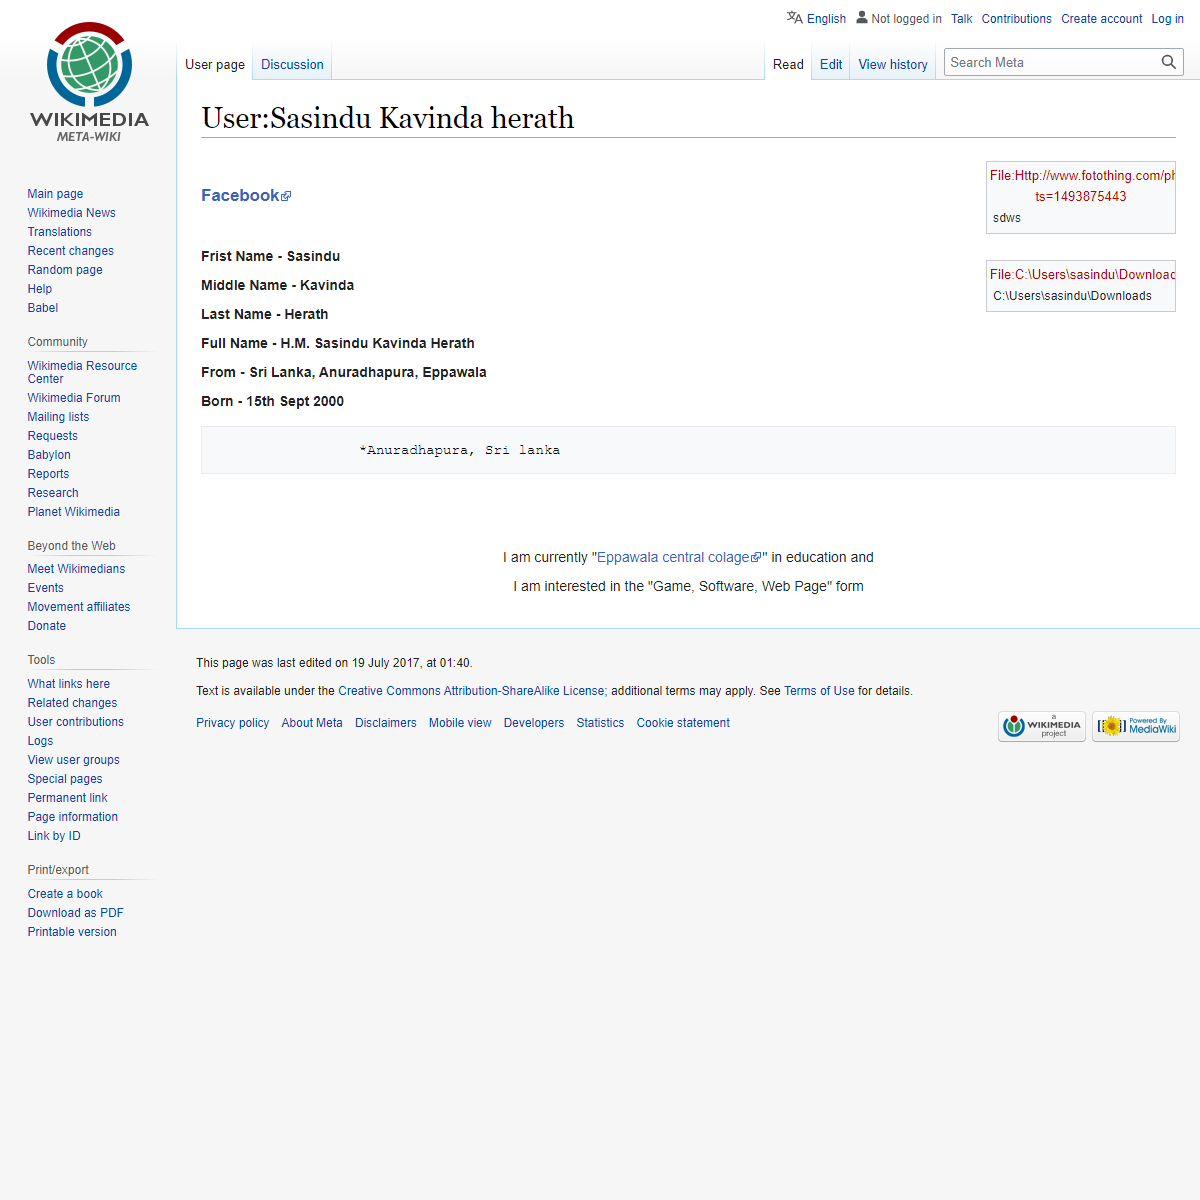 A complete backup of https://meta.wikimedia.org/wiki/User:Sasindu_Kavinda_herath